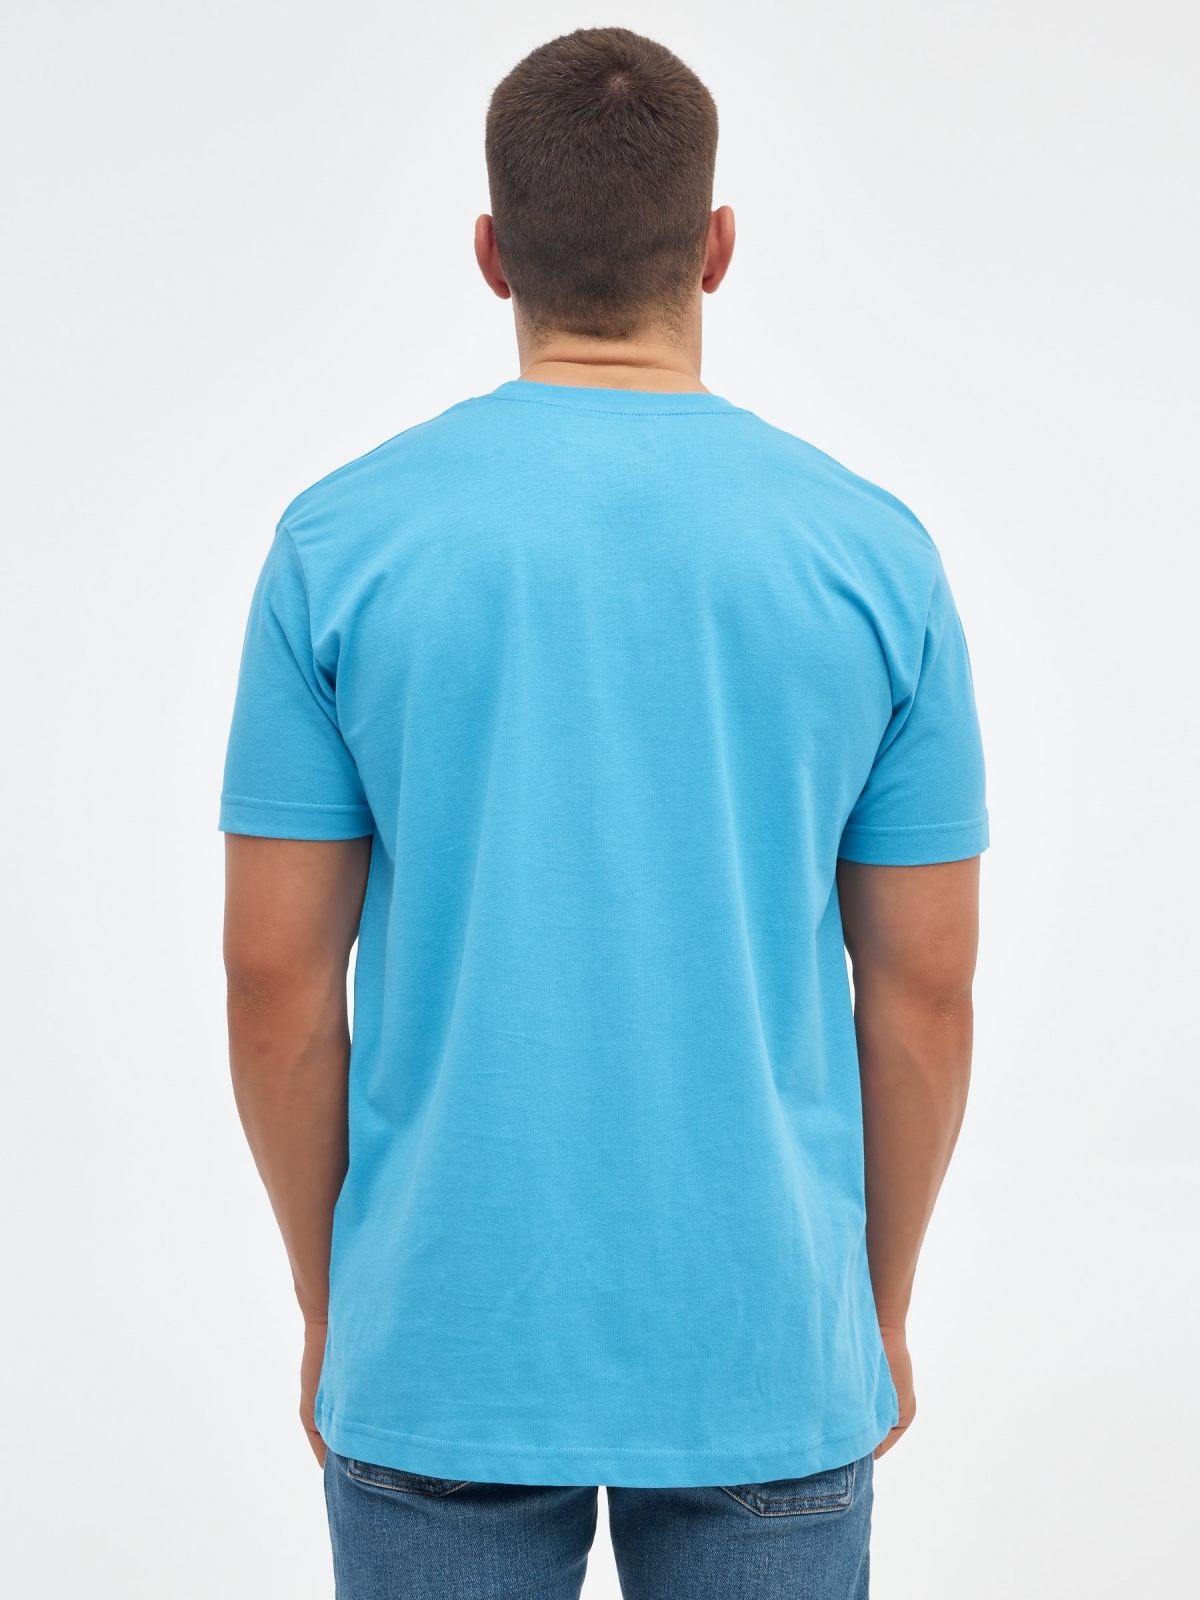 Camiseta básica manga corta azul claro vista media trasera